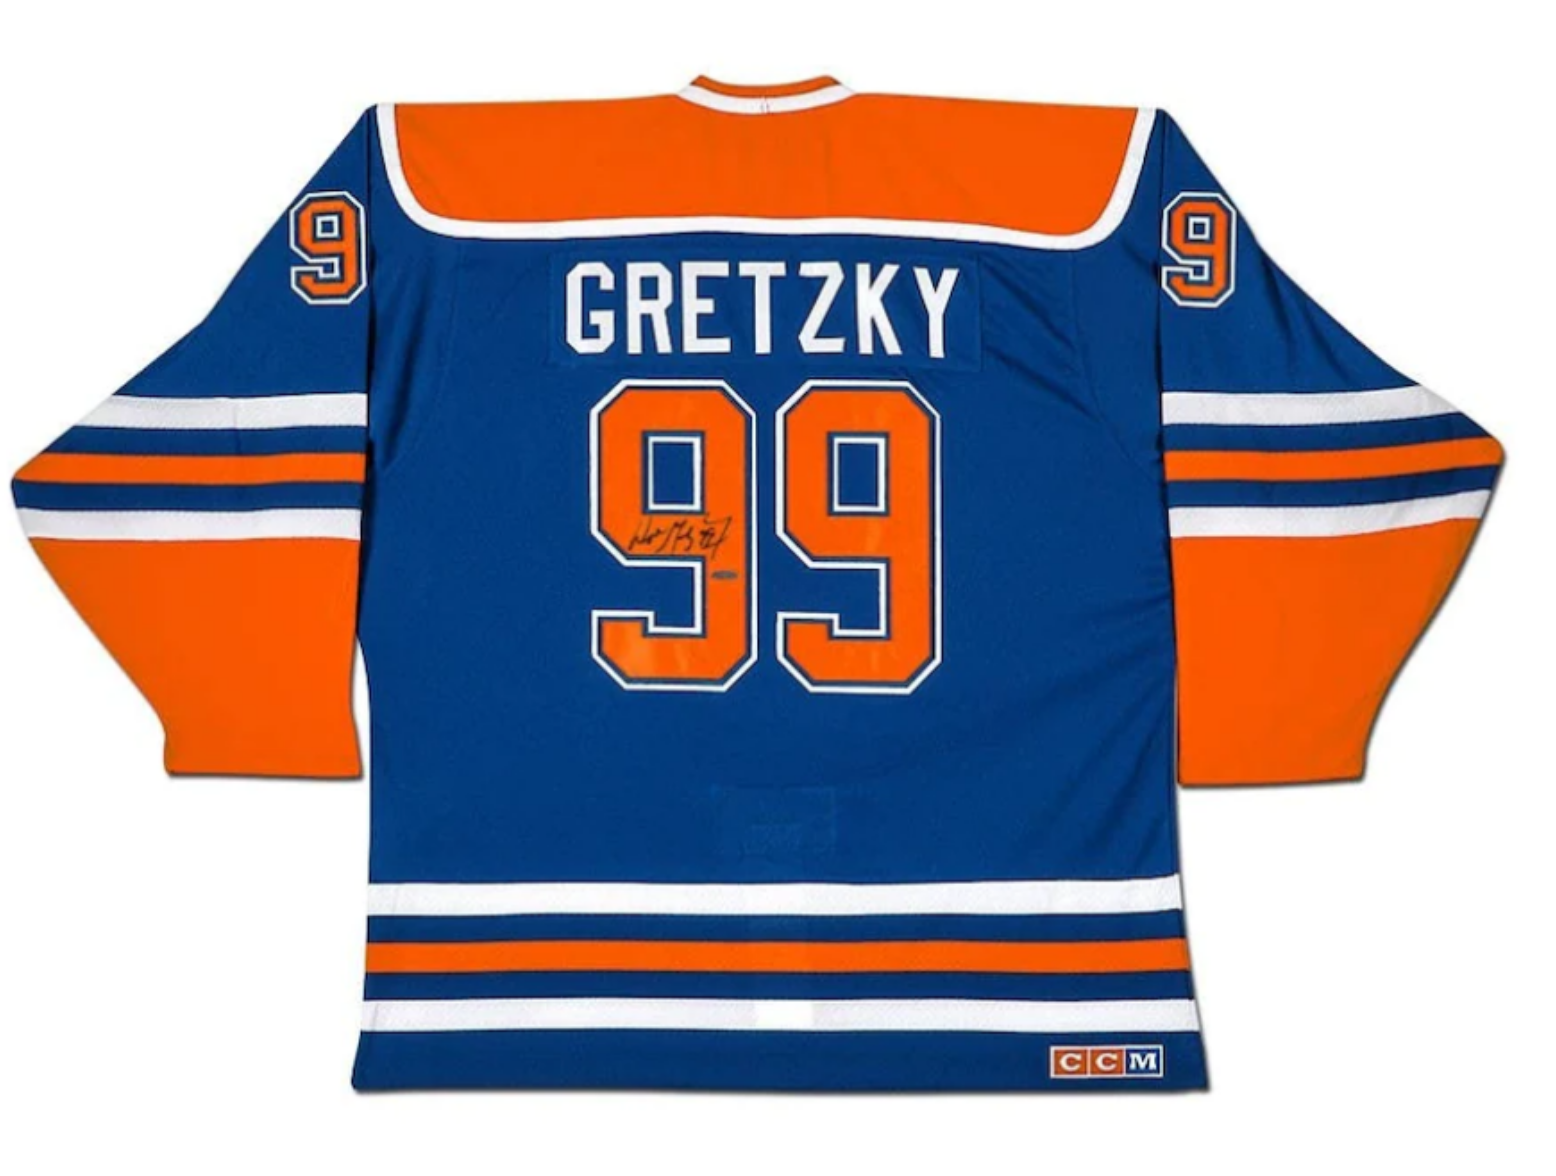 CCM Authentic Wayne Gretzky LA KINGS NHL Hockey Jersey 48 Black